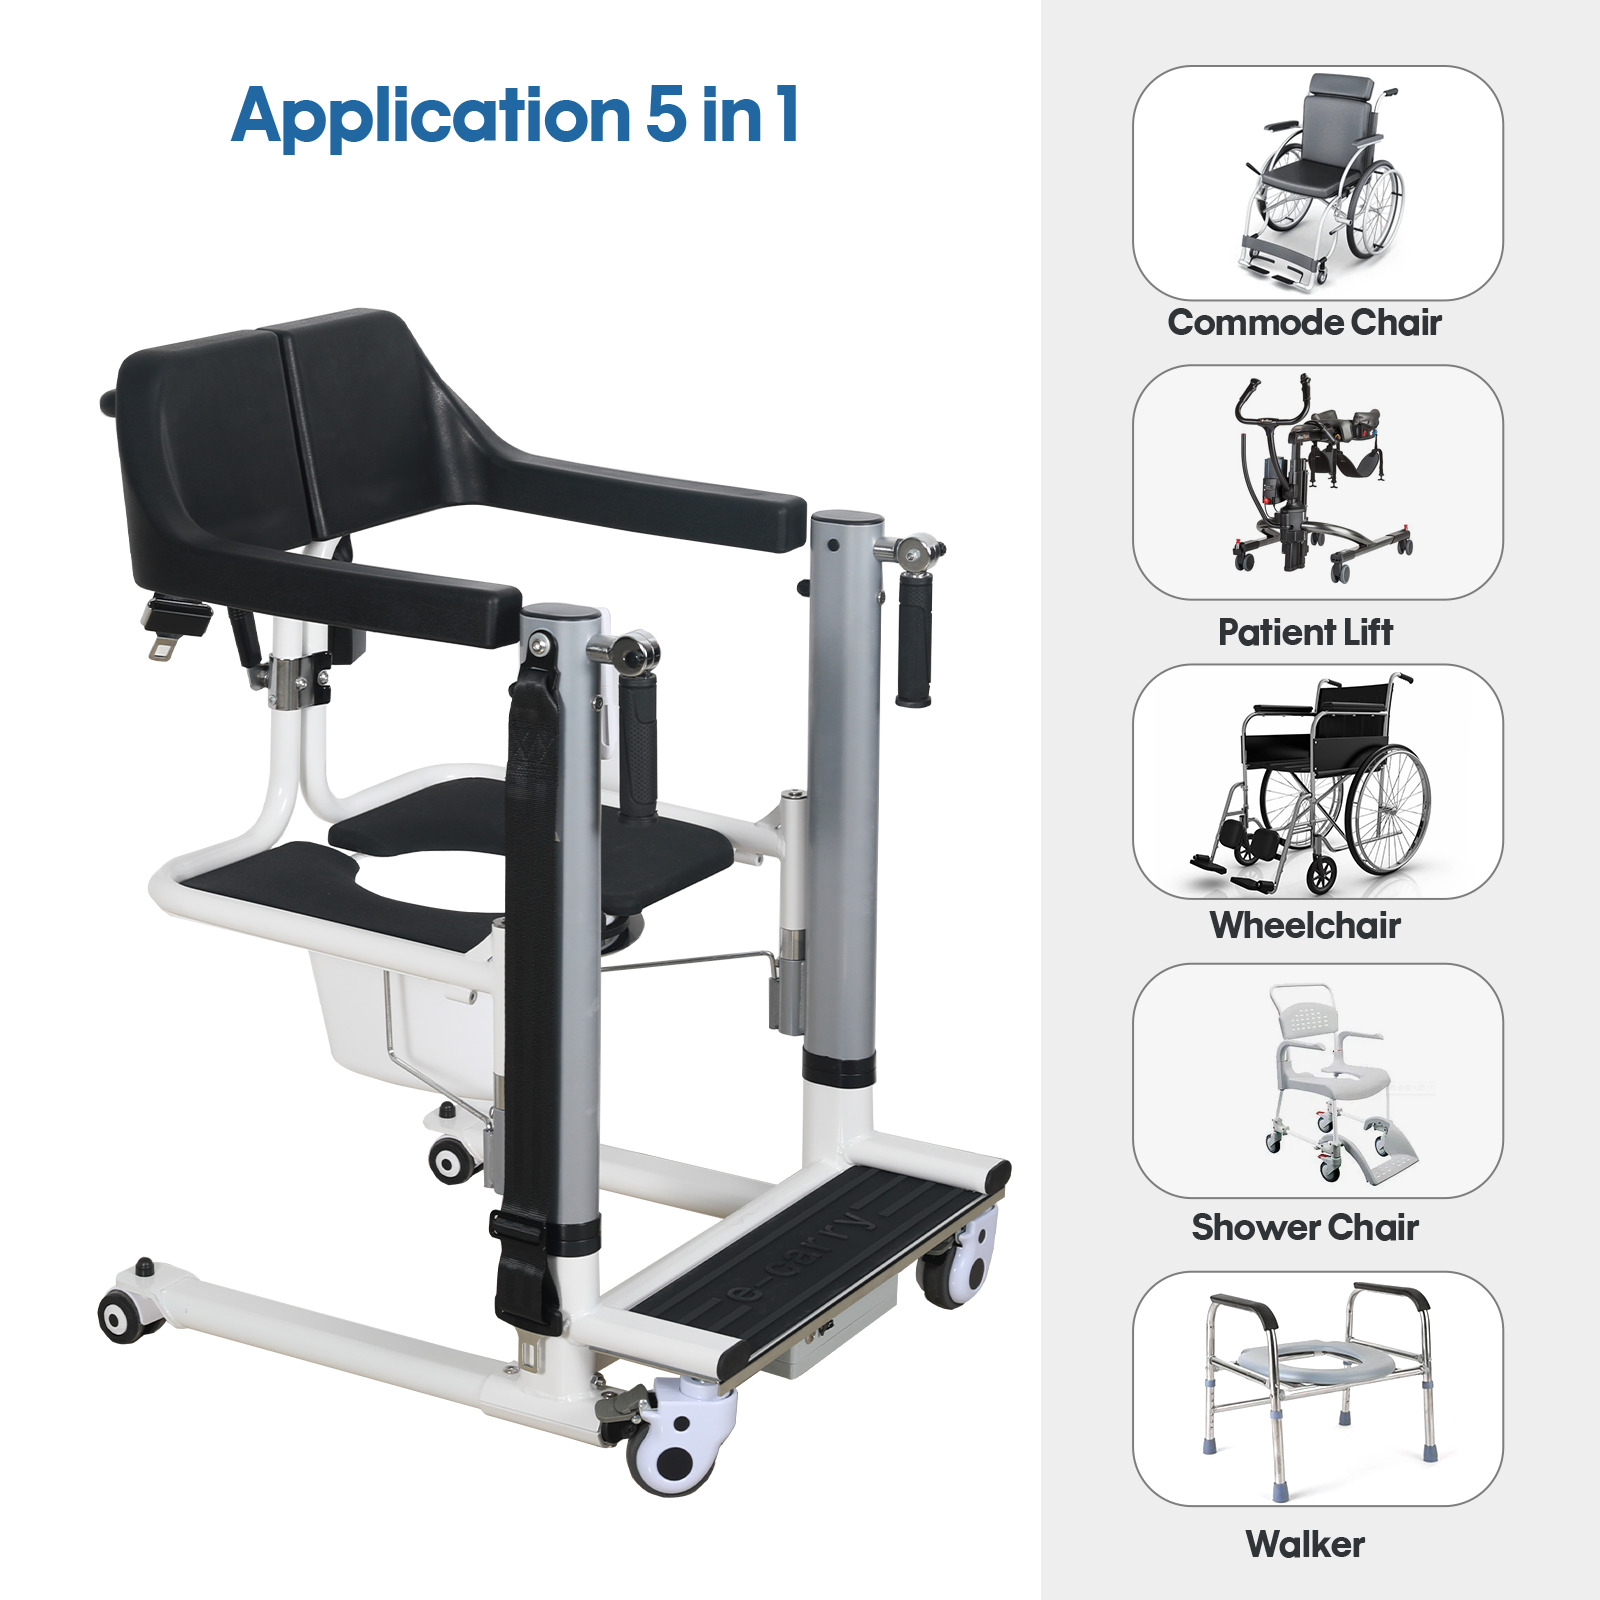 Patient Transfer Chairs vs Standing Hoists - သင့်အတွက် အသင့်တော်ဆုံး Mobility Aid